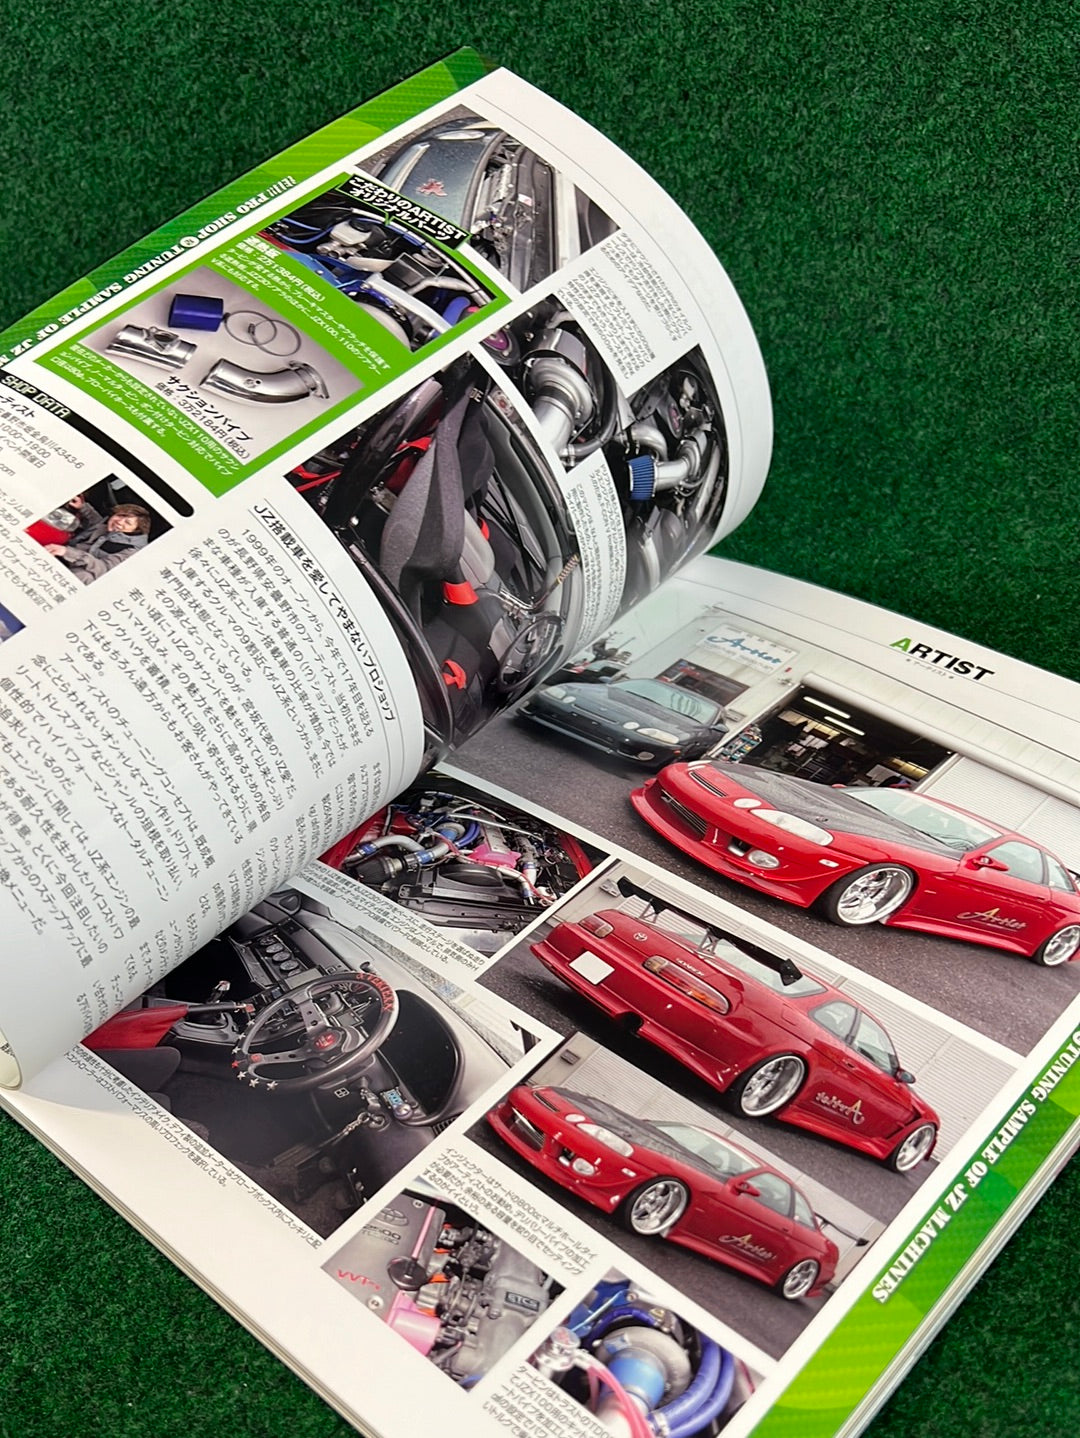 Toyota - SAN-EI Mook 1 & 2 JZ Technical Handbook Magazine